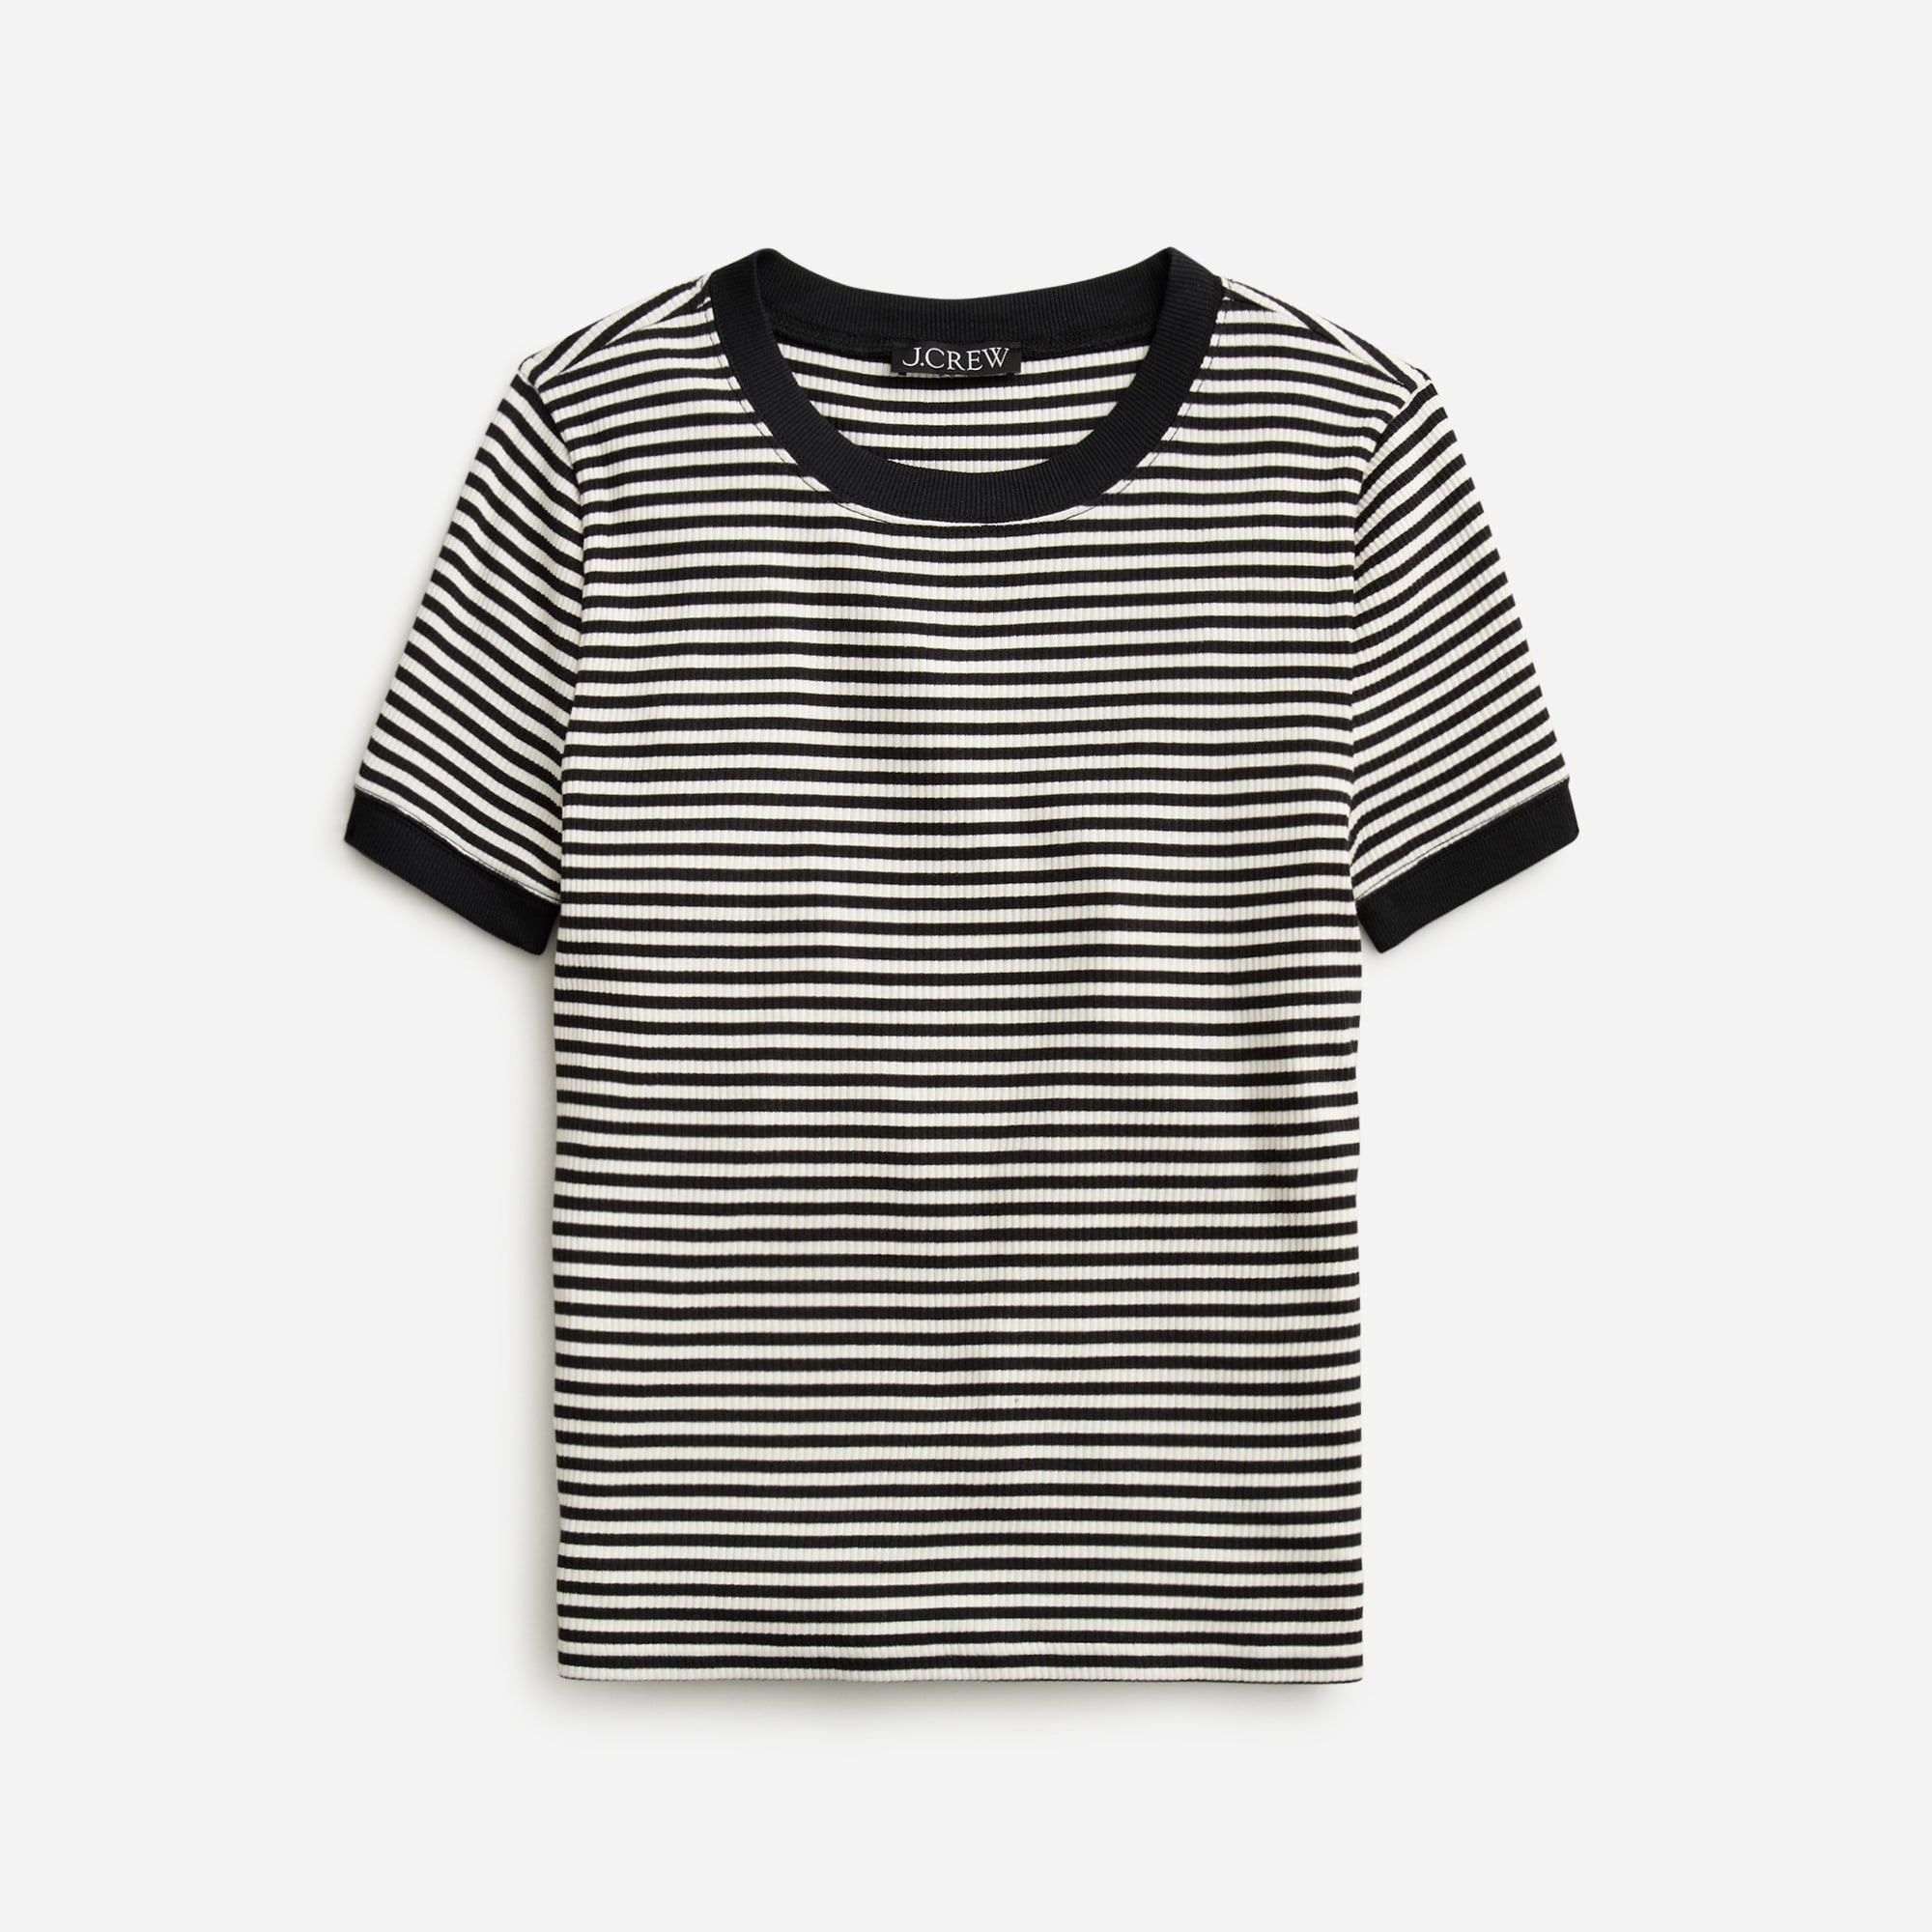  Vintage rib shrunken T-shirt with contrast trim in stripe